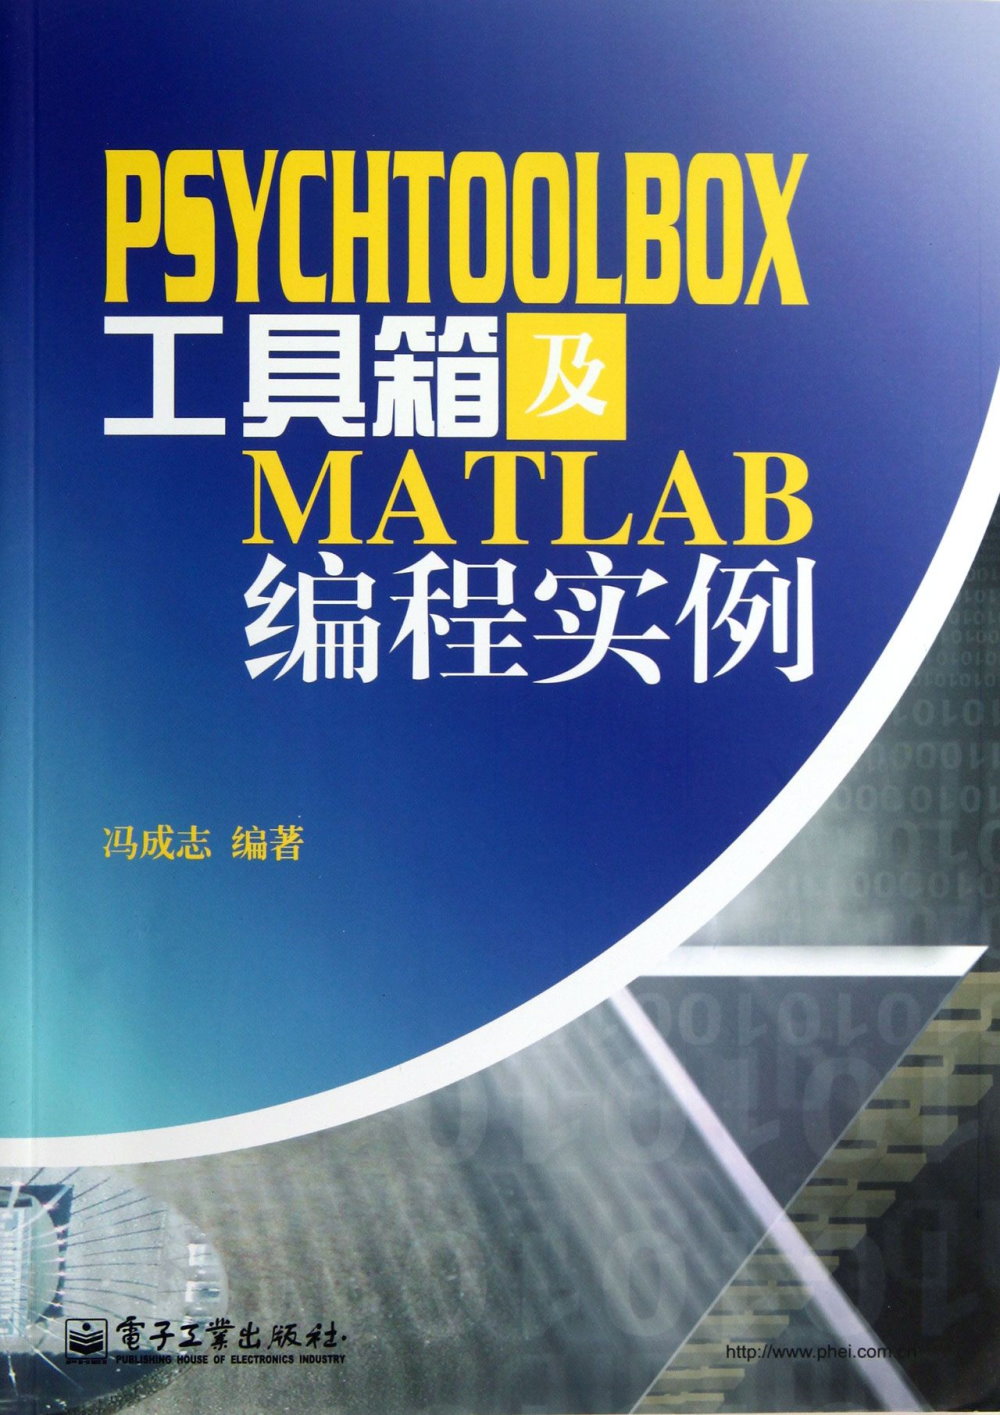 PSYCHTOOLBOX工具箱及MATLAB編程實例